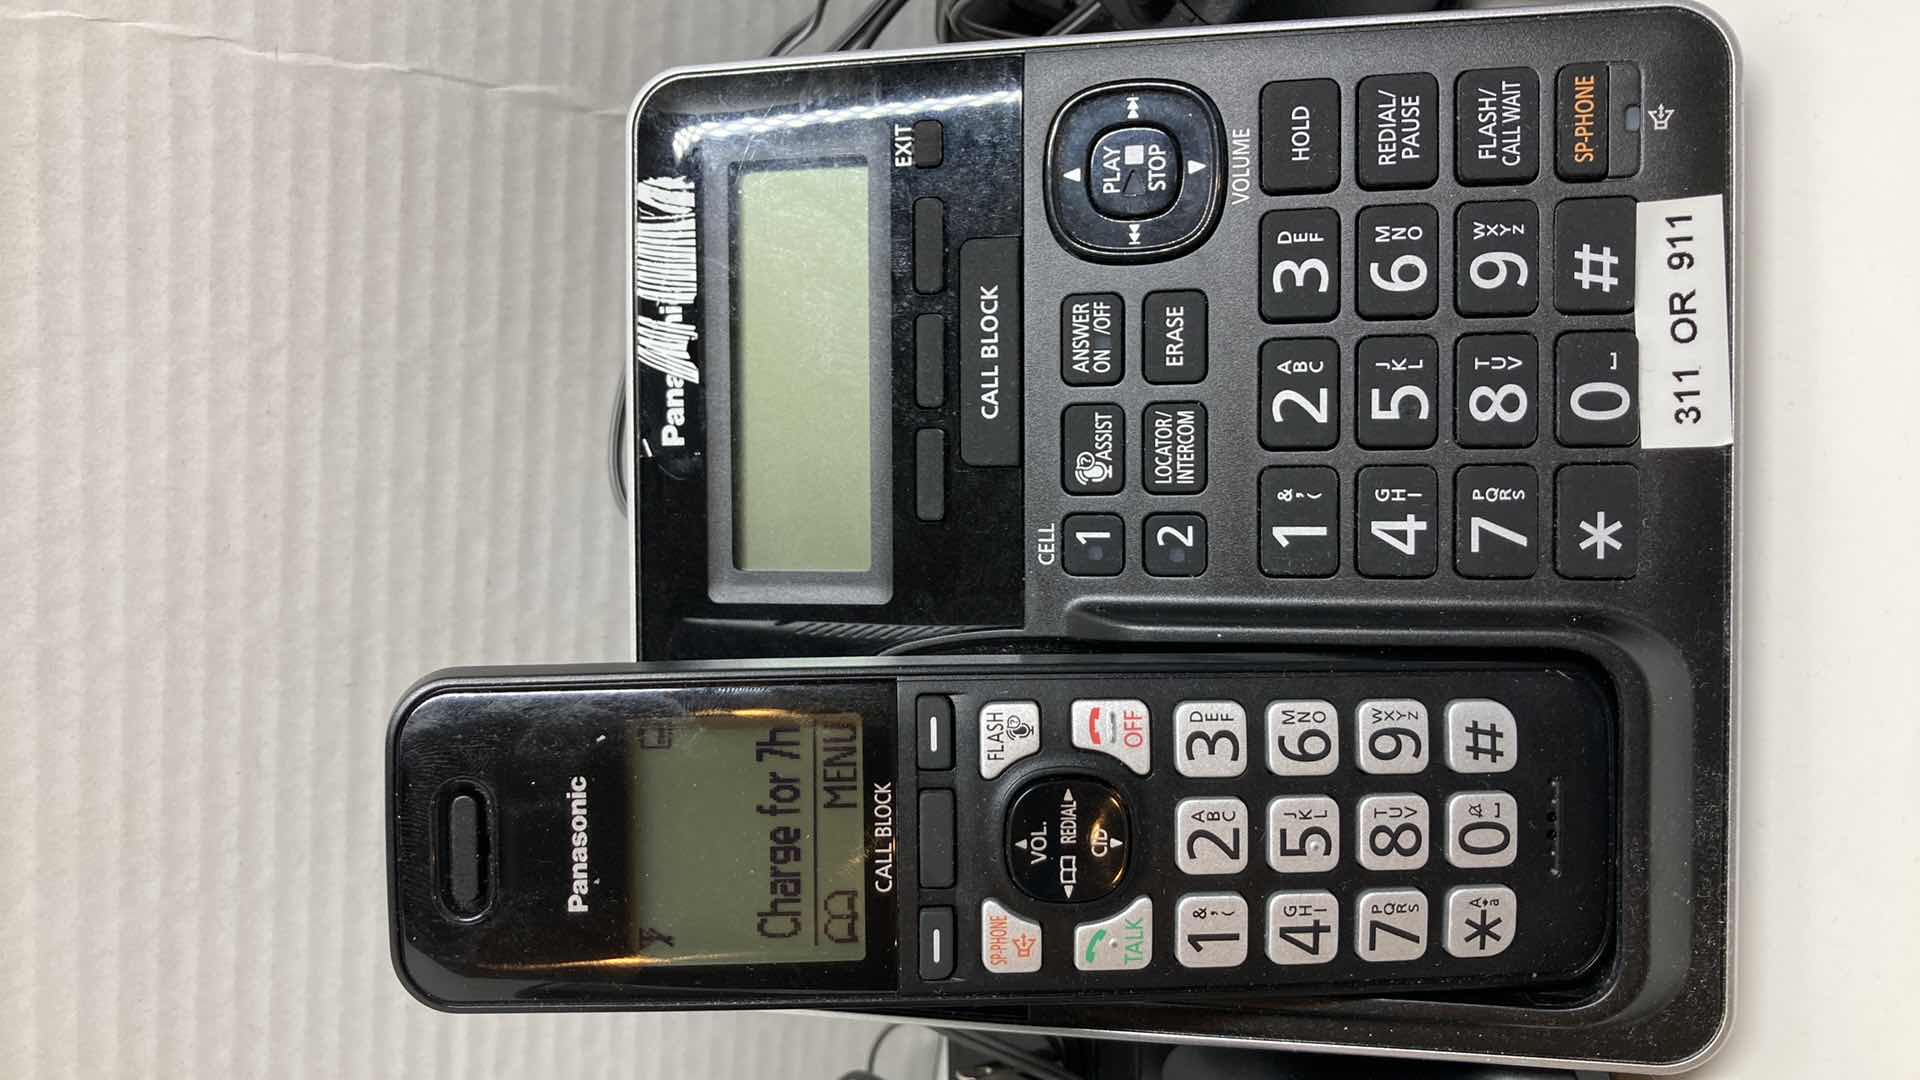 Photo 2 of PANASONIC CORDLESS PHONE SYSTEM W 5 PHONES & ANSWERING MACHINE MODEL